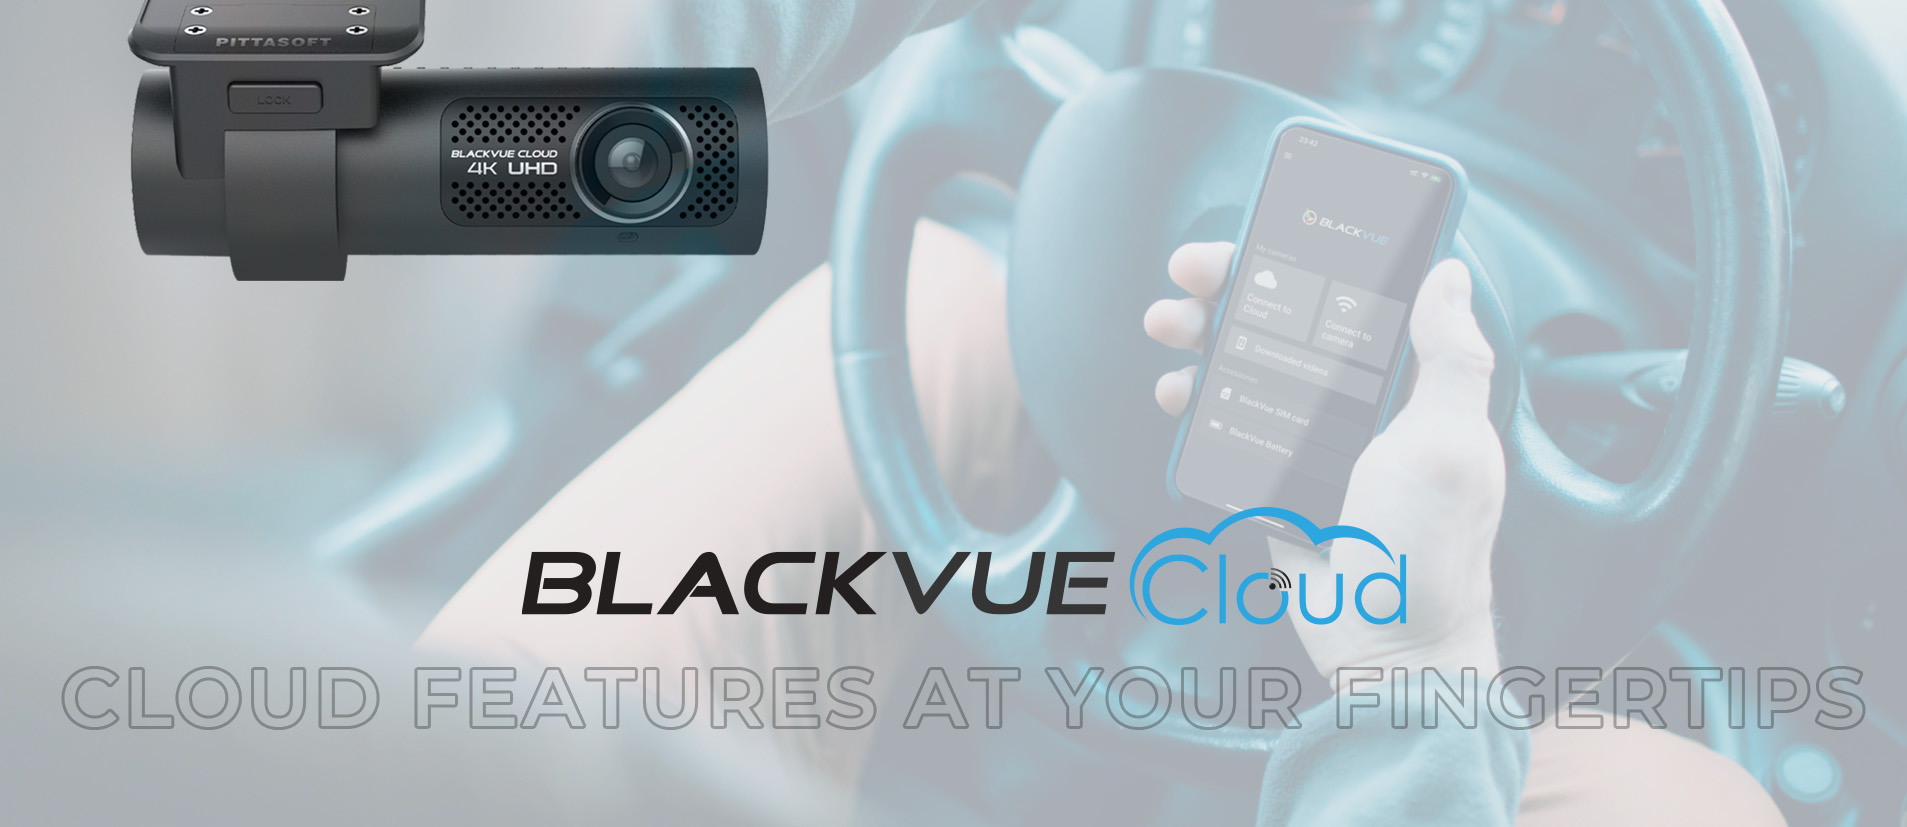 BlackVue DR770X-2CH-TRUCK Dash Cam w/ Exterior Rear Camera